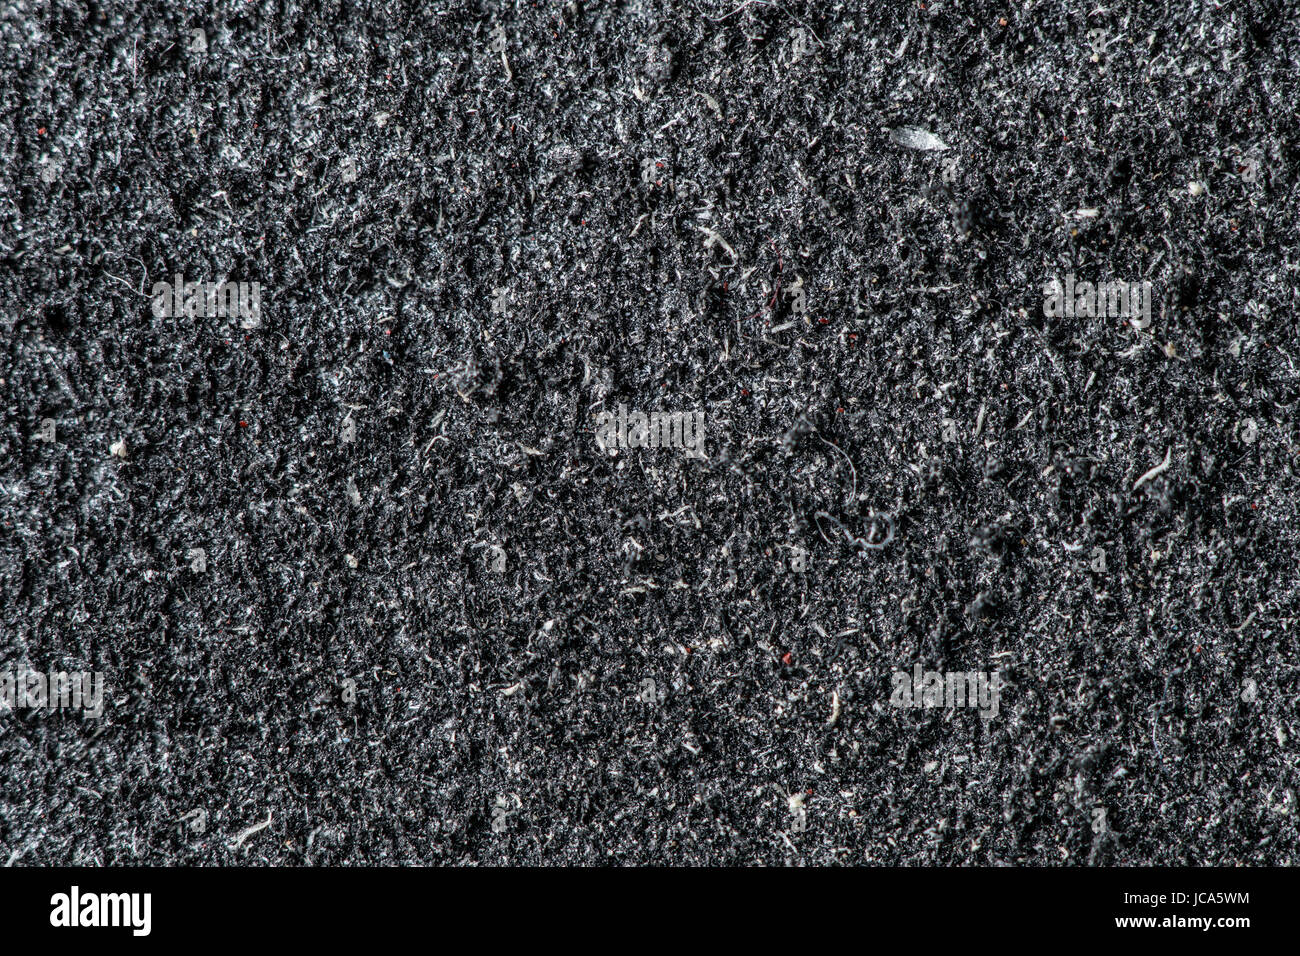 Kautschuk gelöscht Oberfläche super Nahaufnahme. Vergrößerung ca. 100 Mal. Stockfoto